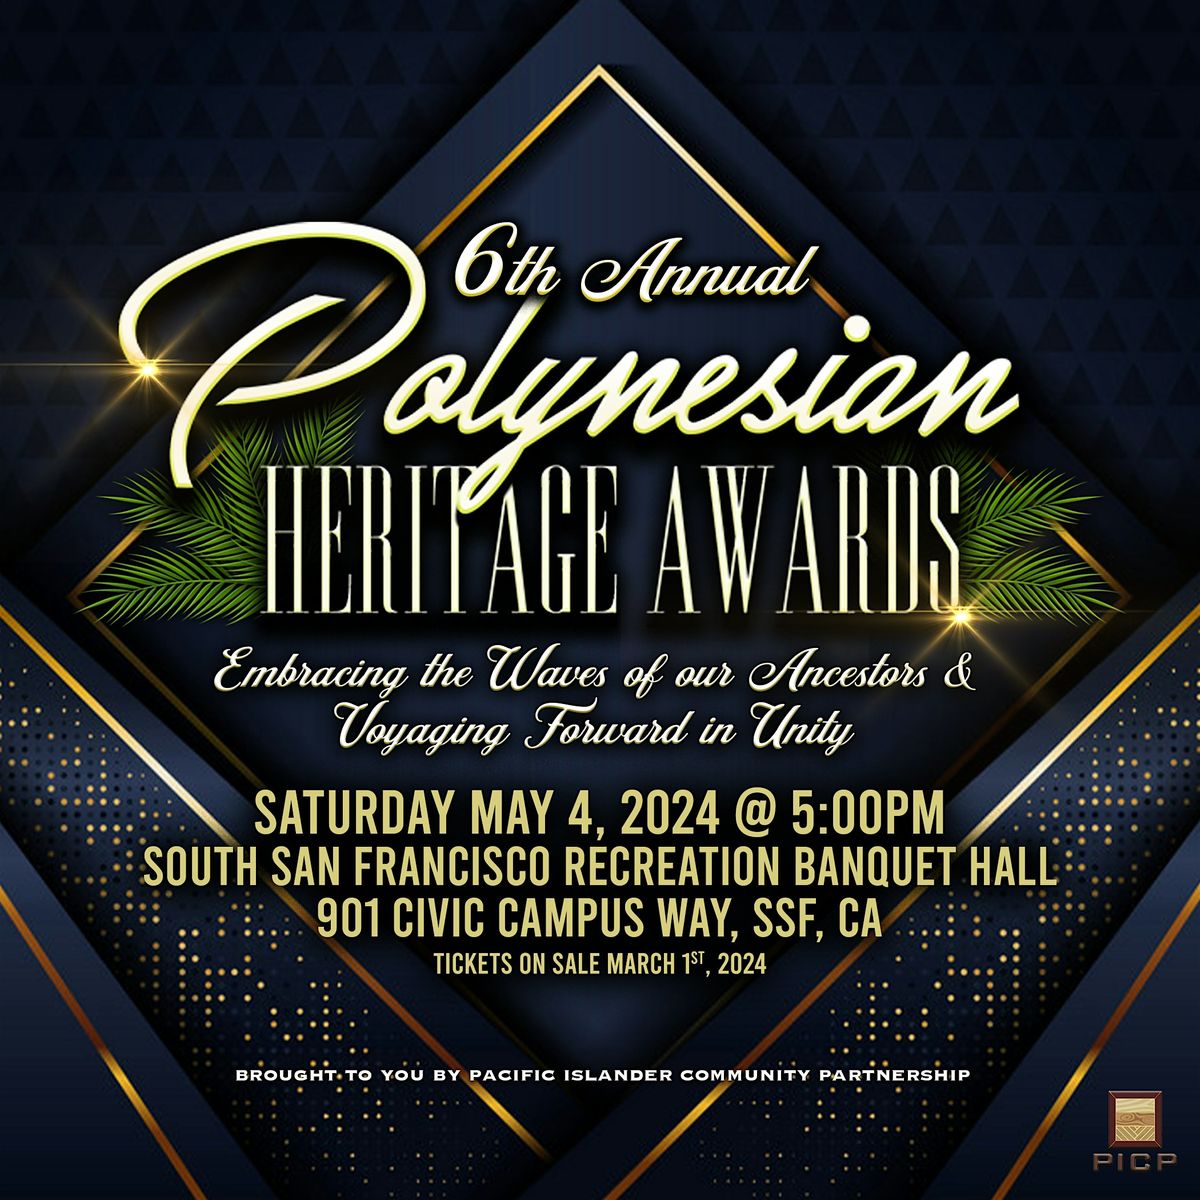 6th Annual Polynesian Heritage Awards